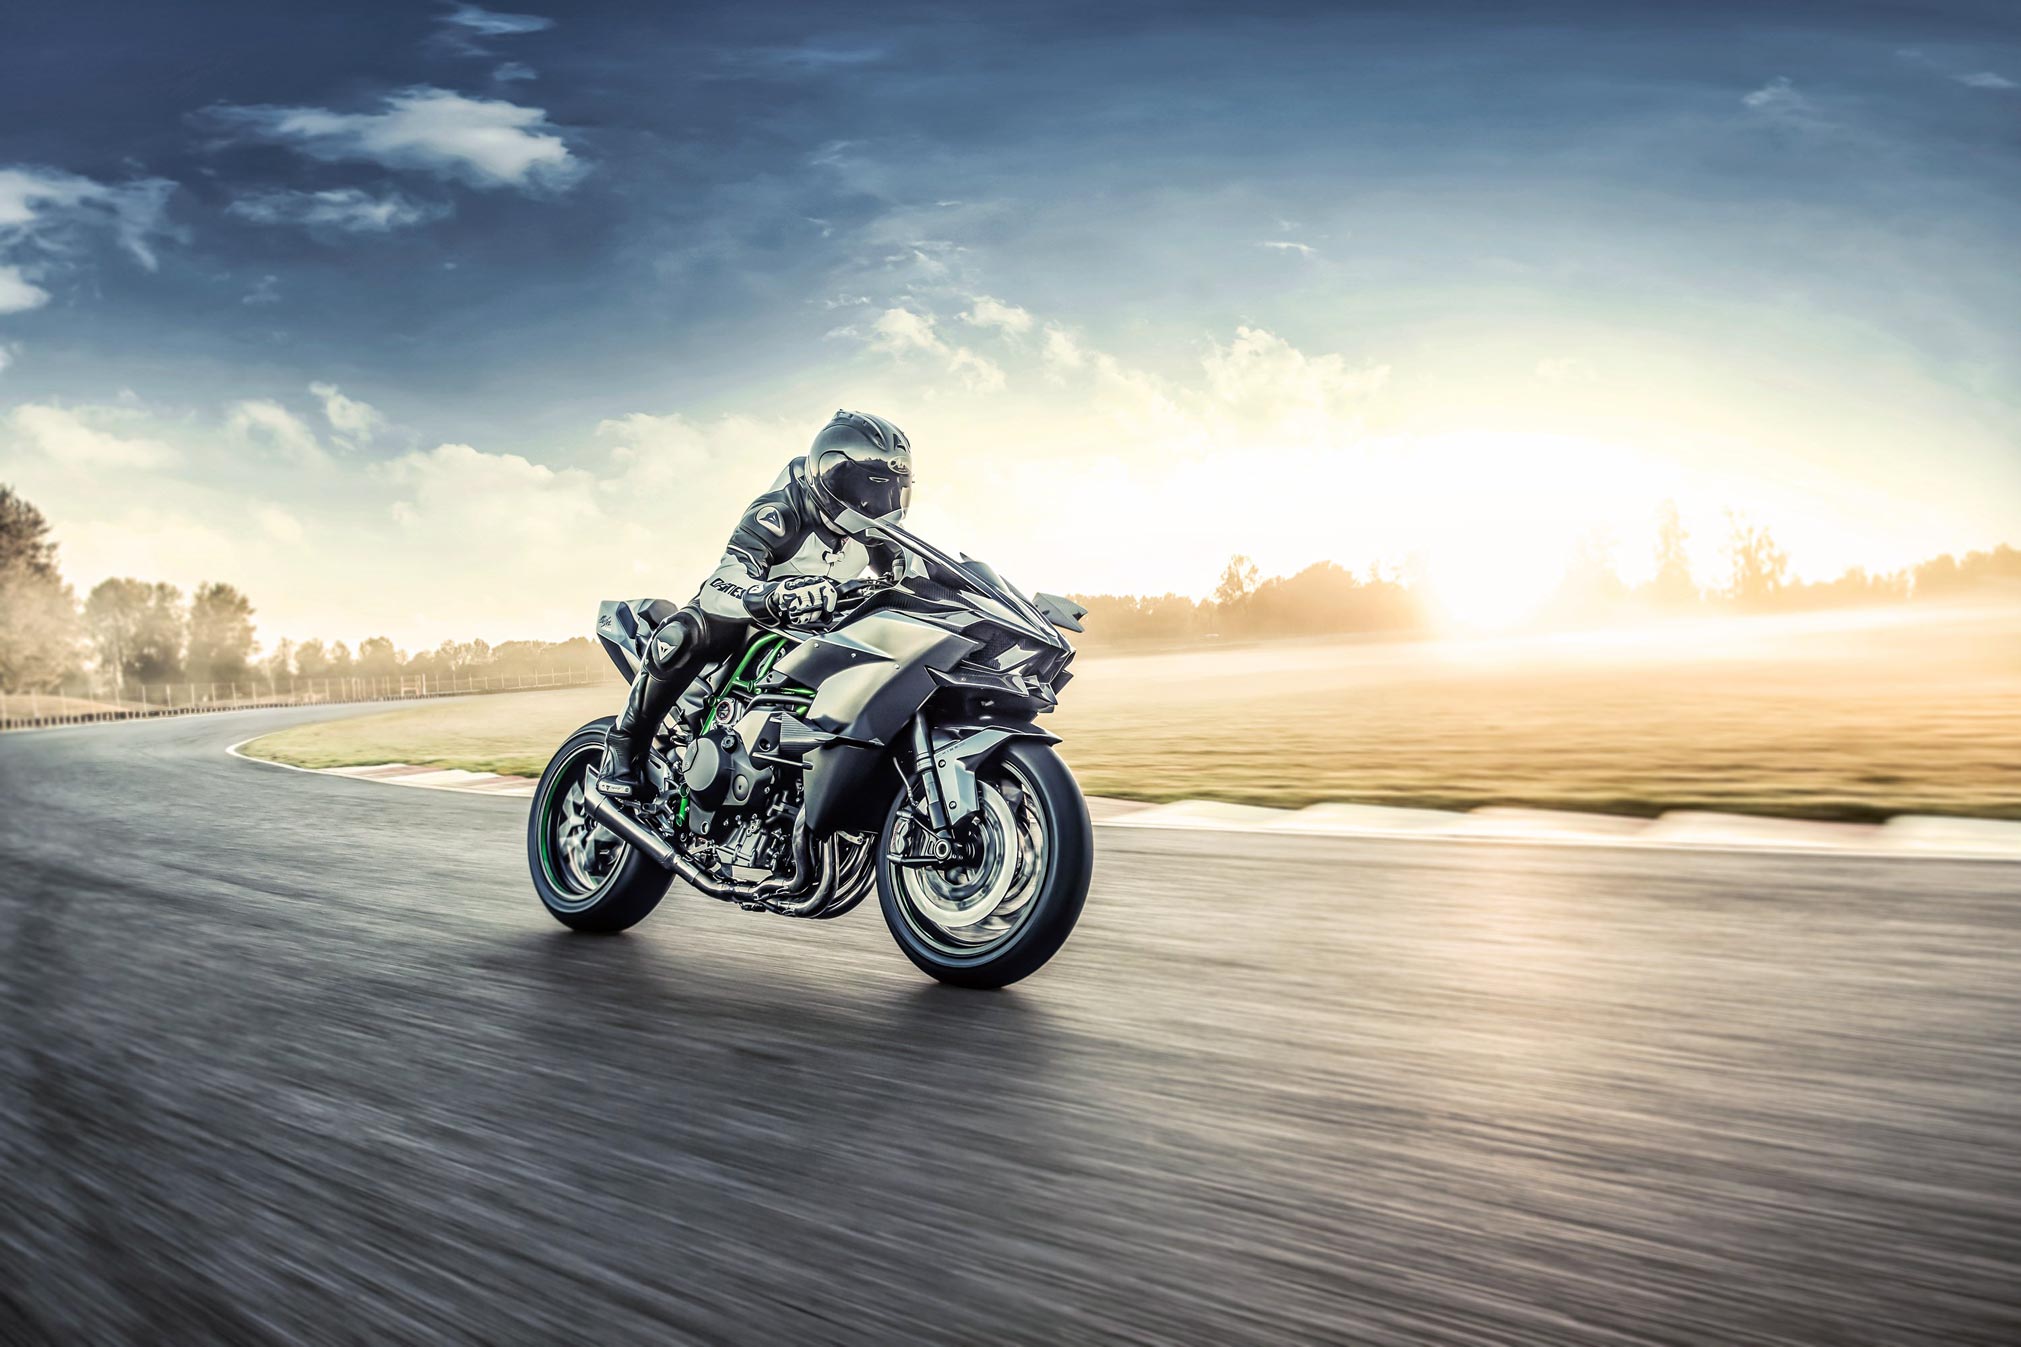 2021 Kawasaki Ninja H2R Guide • Total Motorcycle